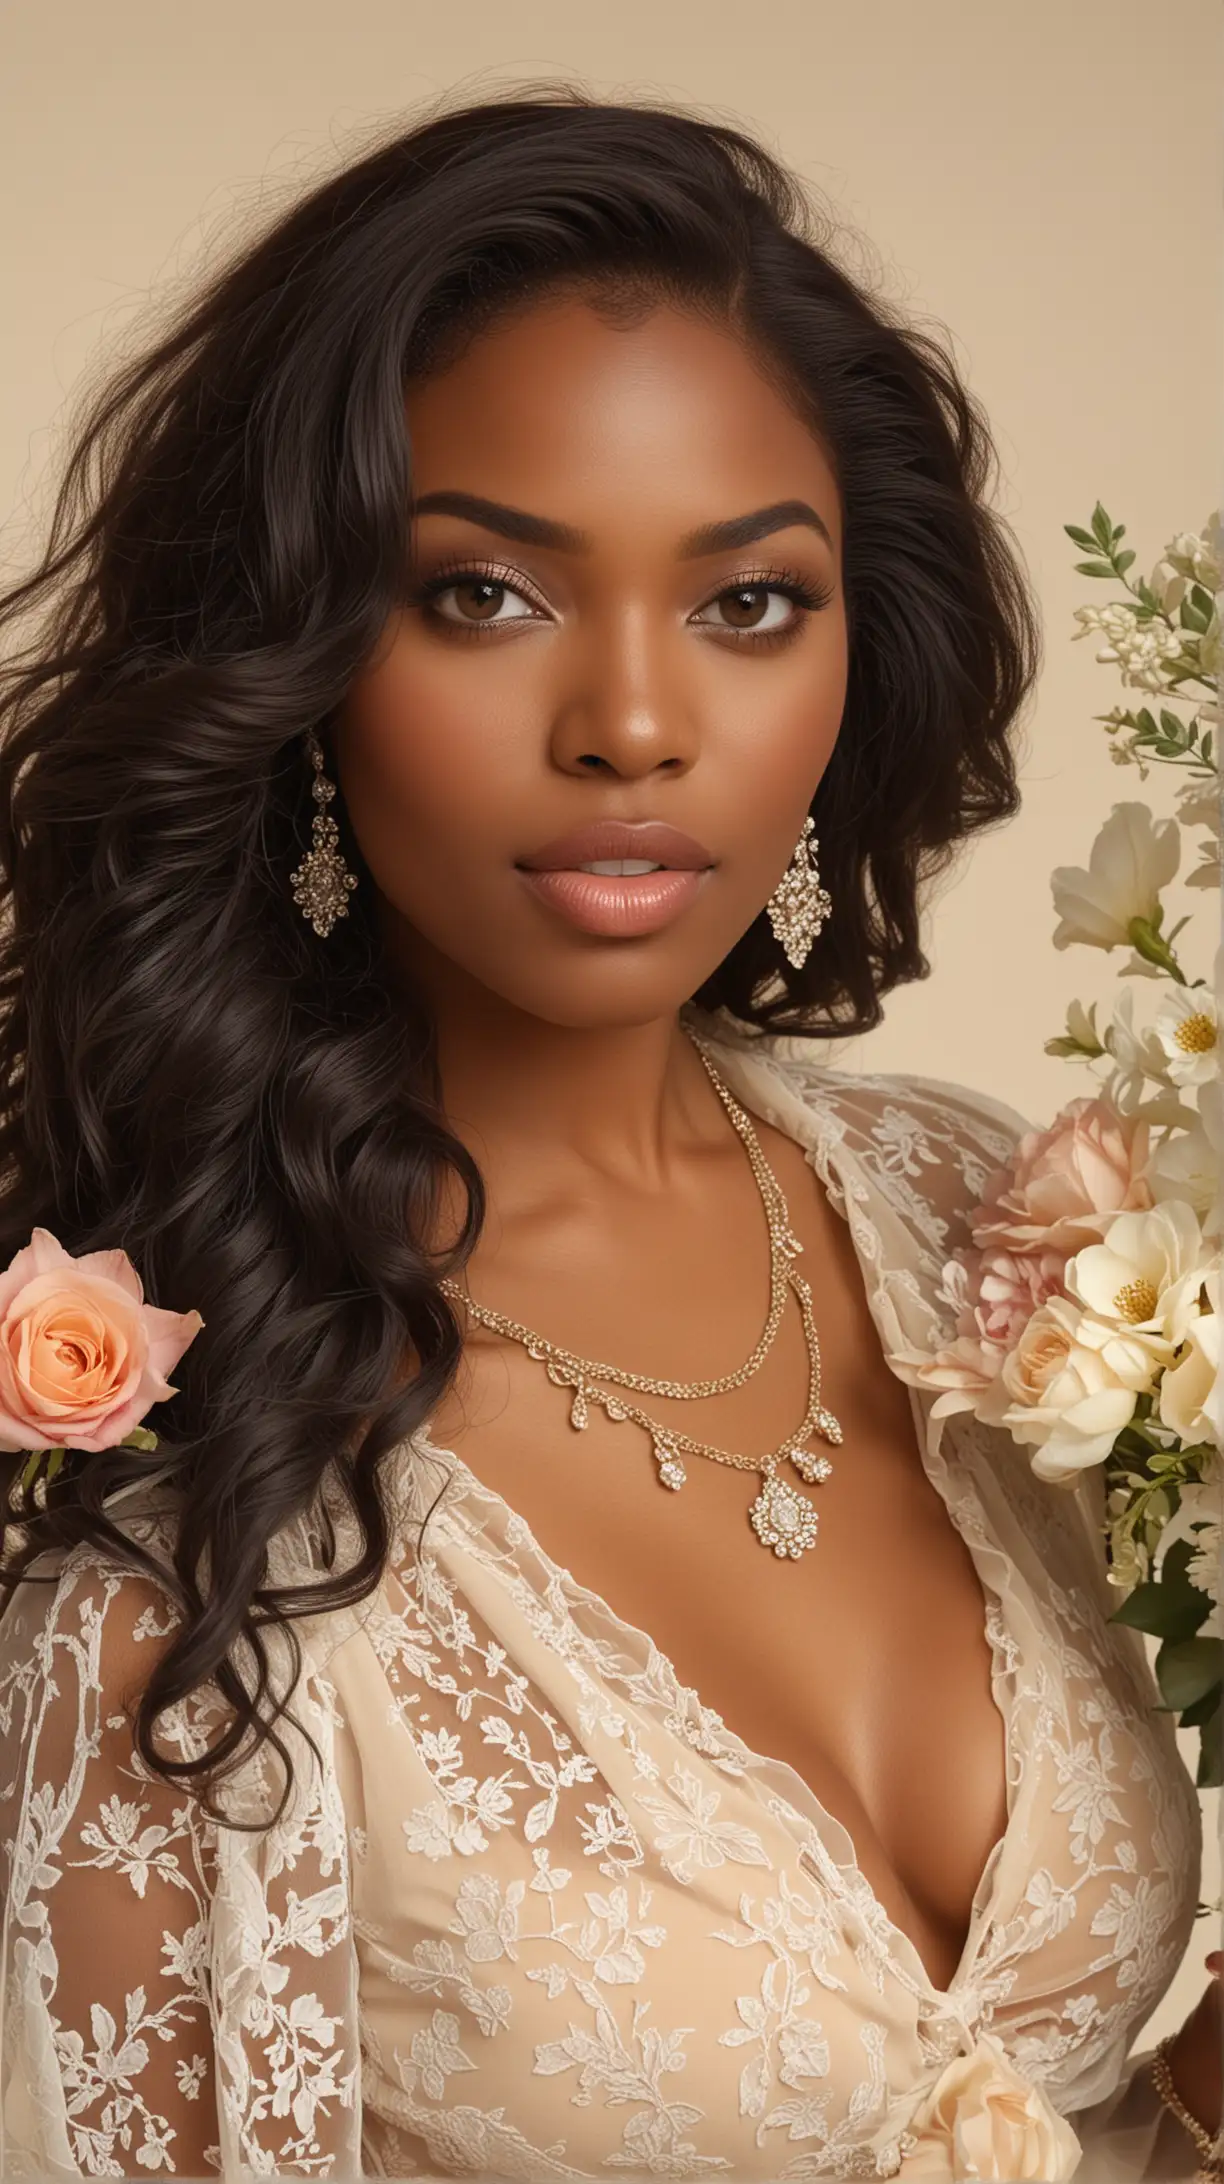 Elegant Black Woman Embracing Flowers Stunning Portrait in Beige Setting